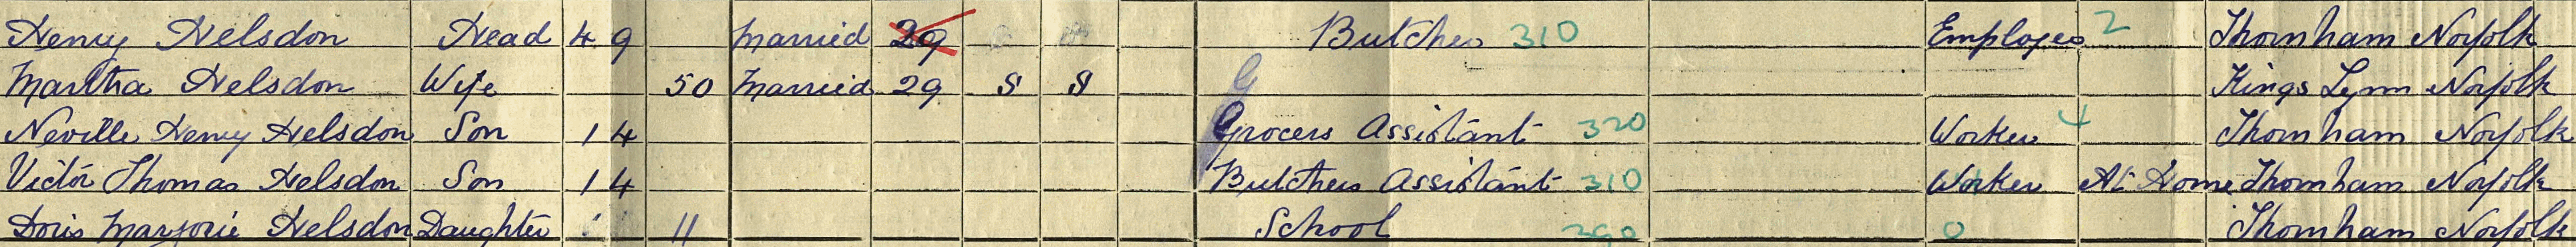 martha helsdon 1911 census